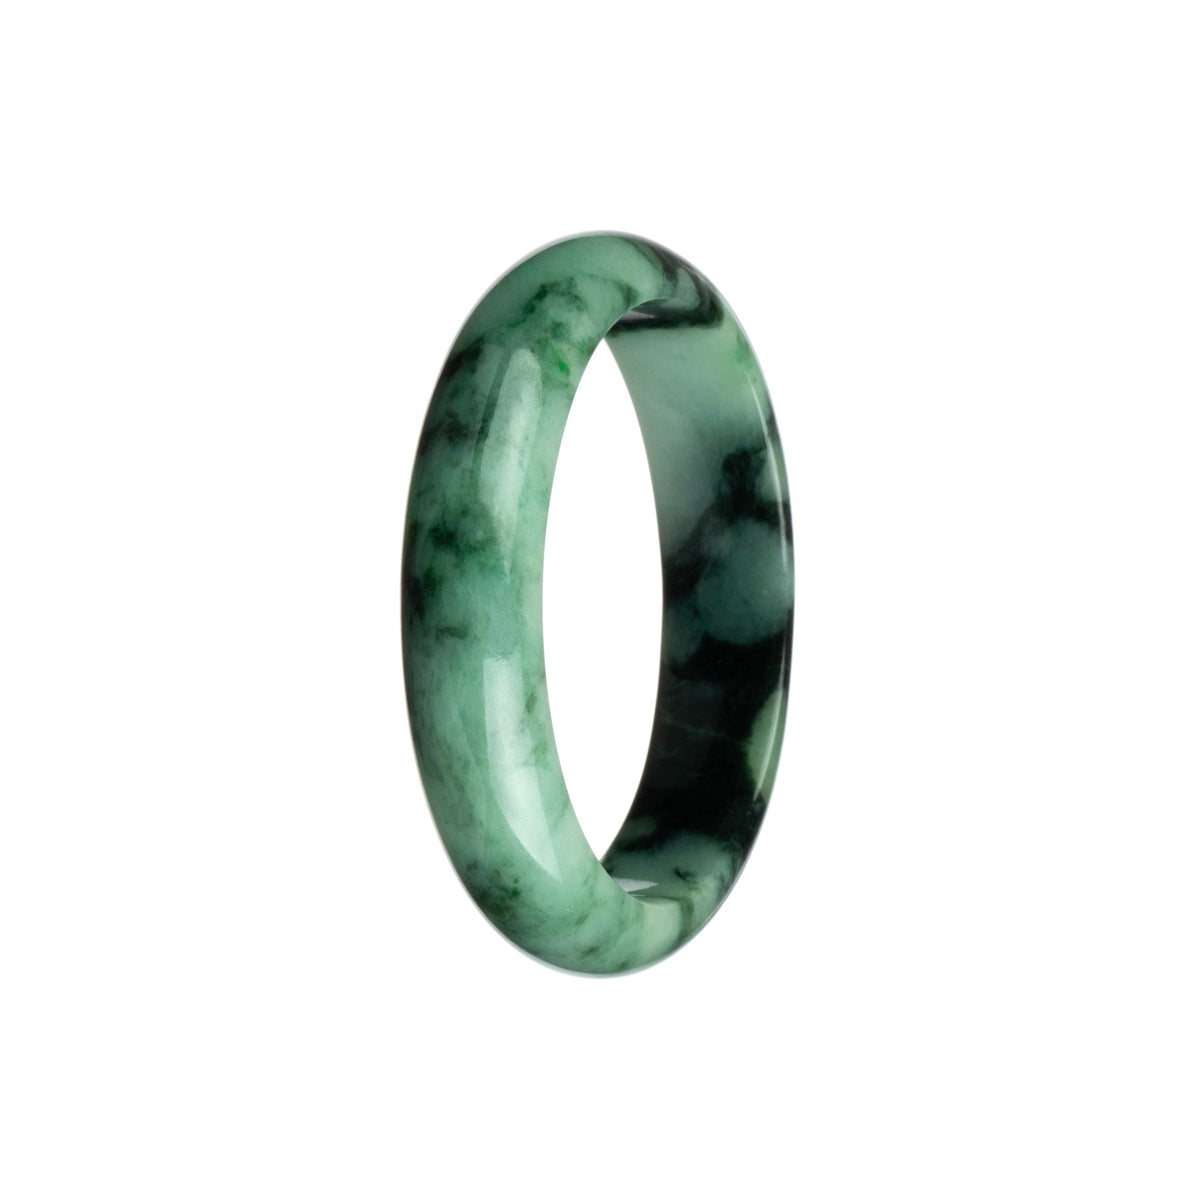 Genuine Grade A Green and Black Pattern Jadeite Bangle Bracelet - 55mm Half Moon